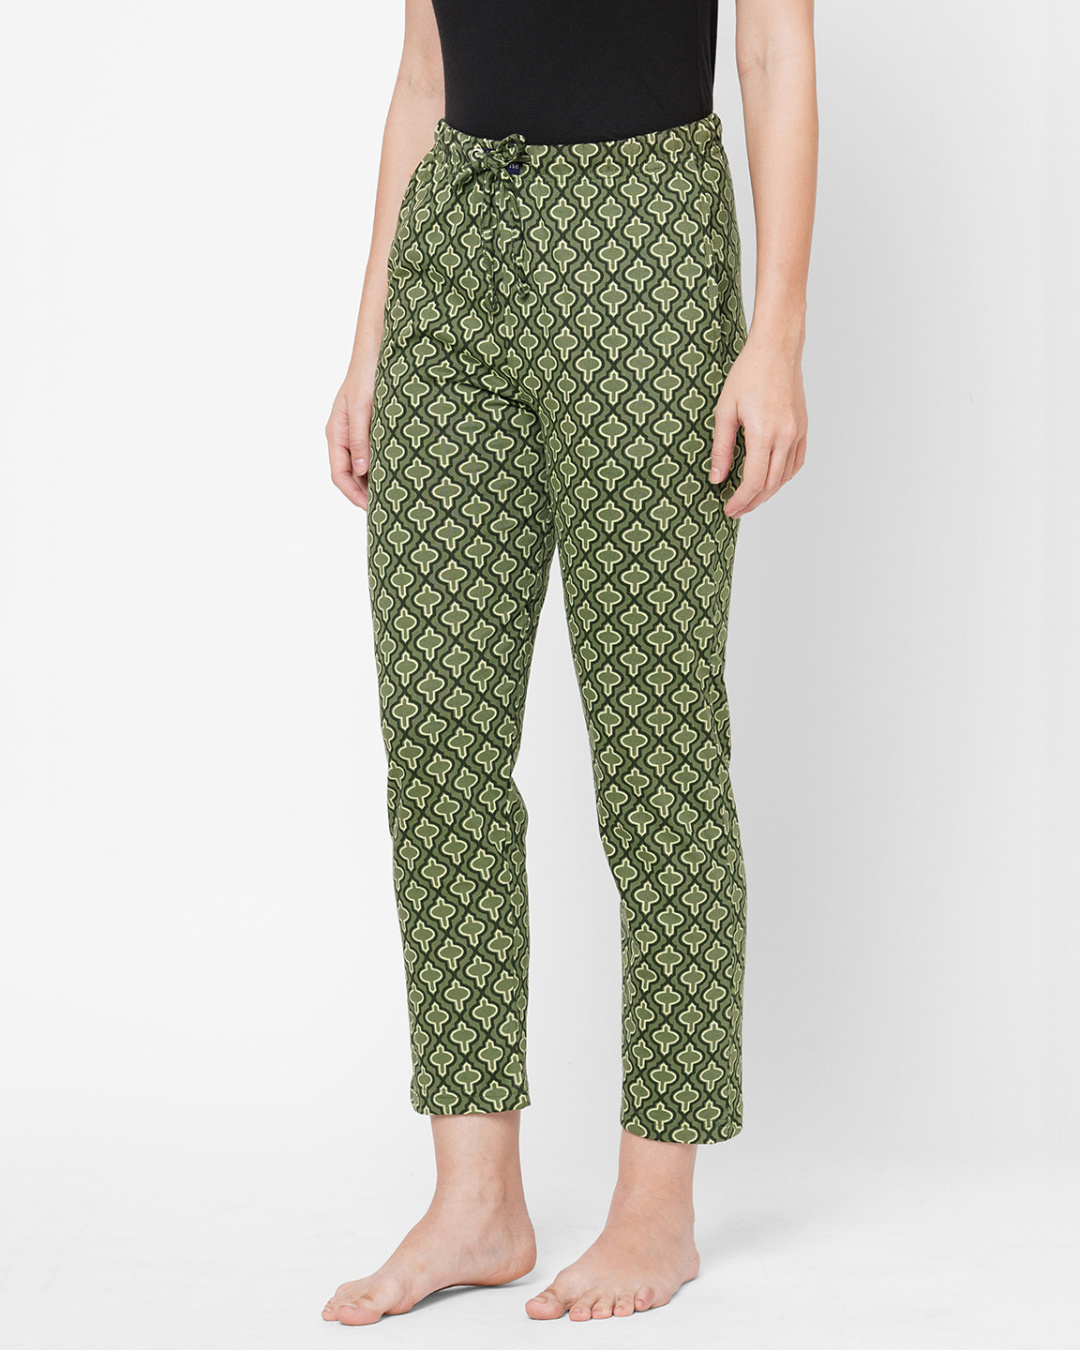 Smarty Pants women's cotton mint green color polka dot print night suit.